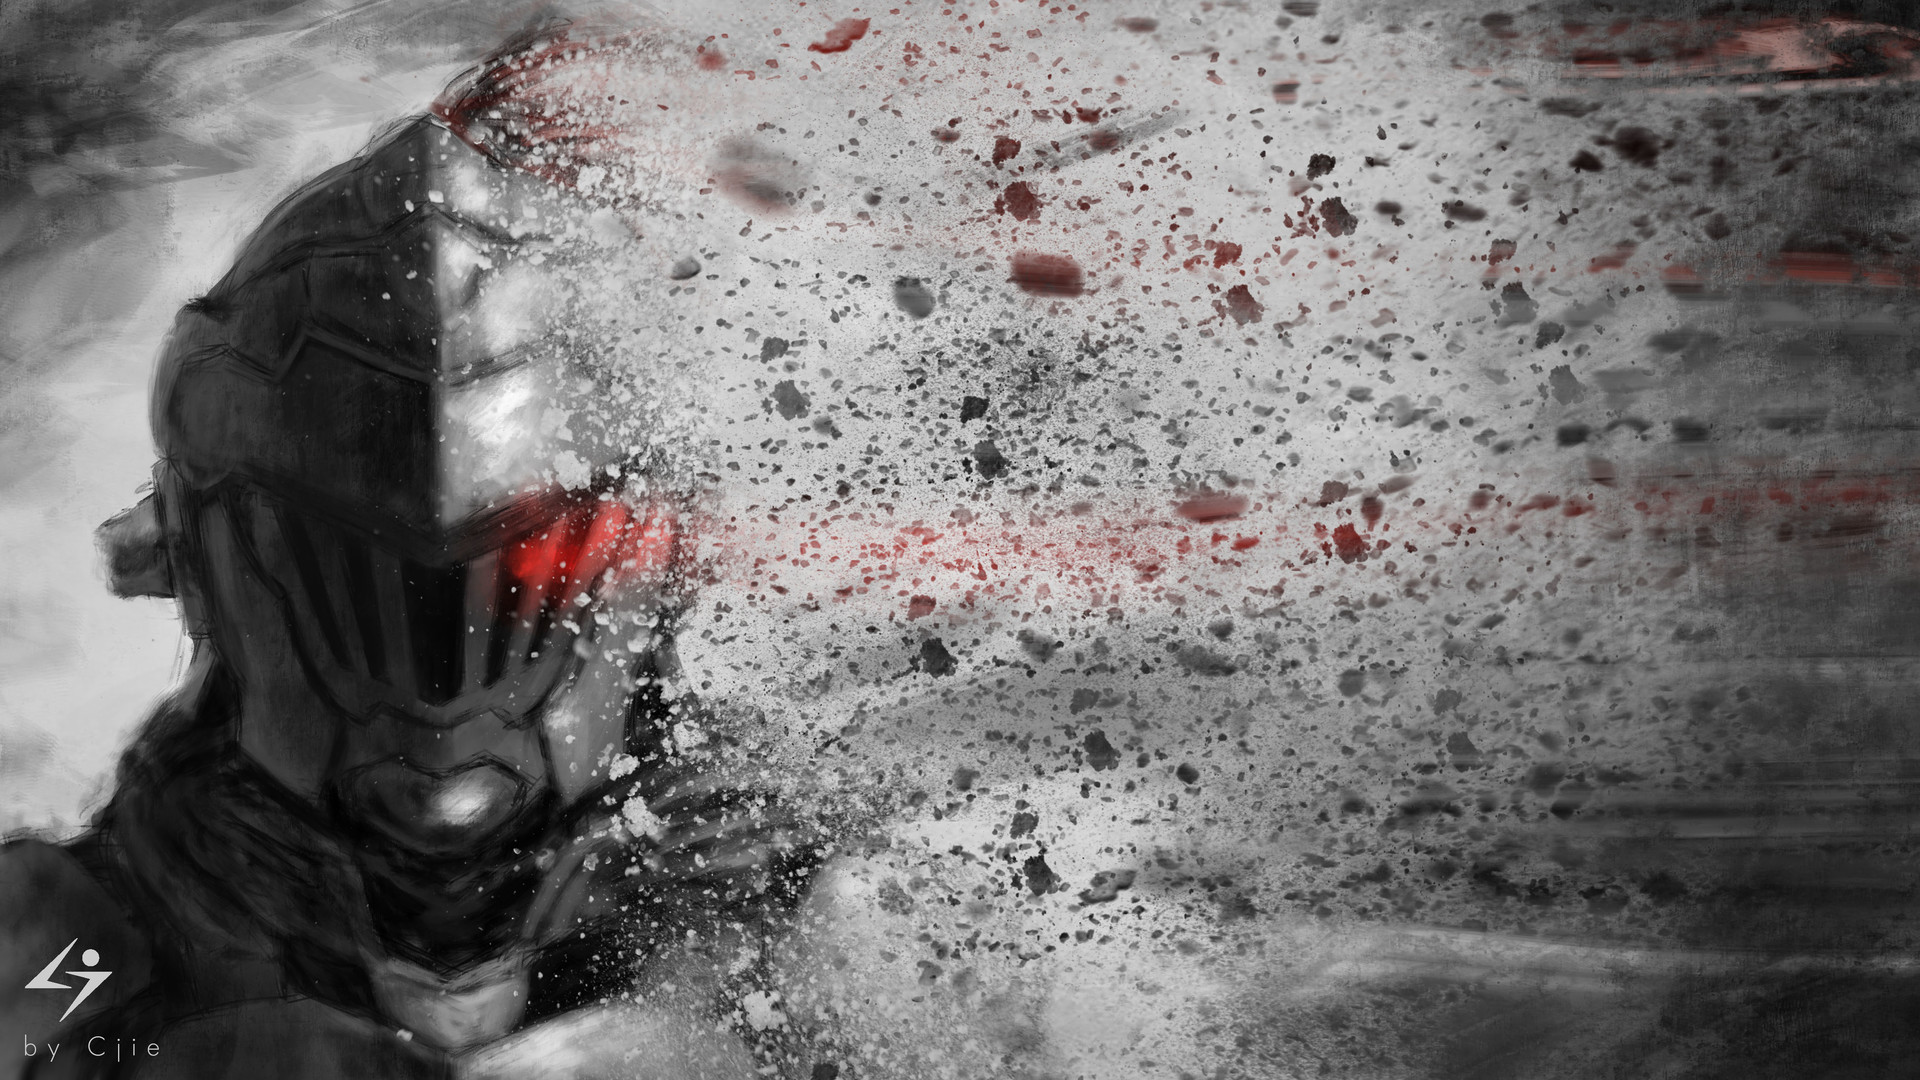 Anime Goblin Slayer HD Wallpaper | Background Image